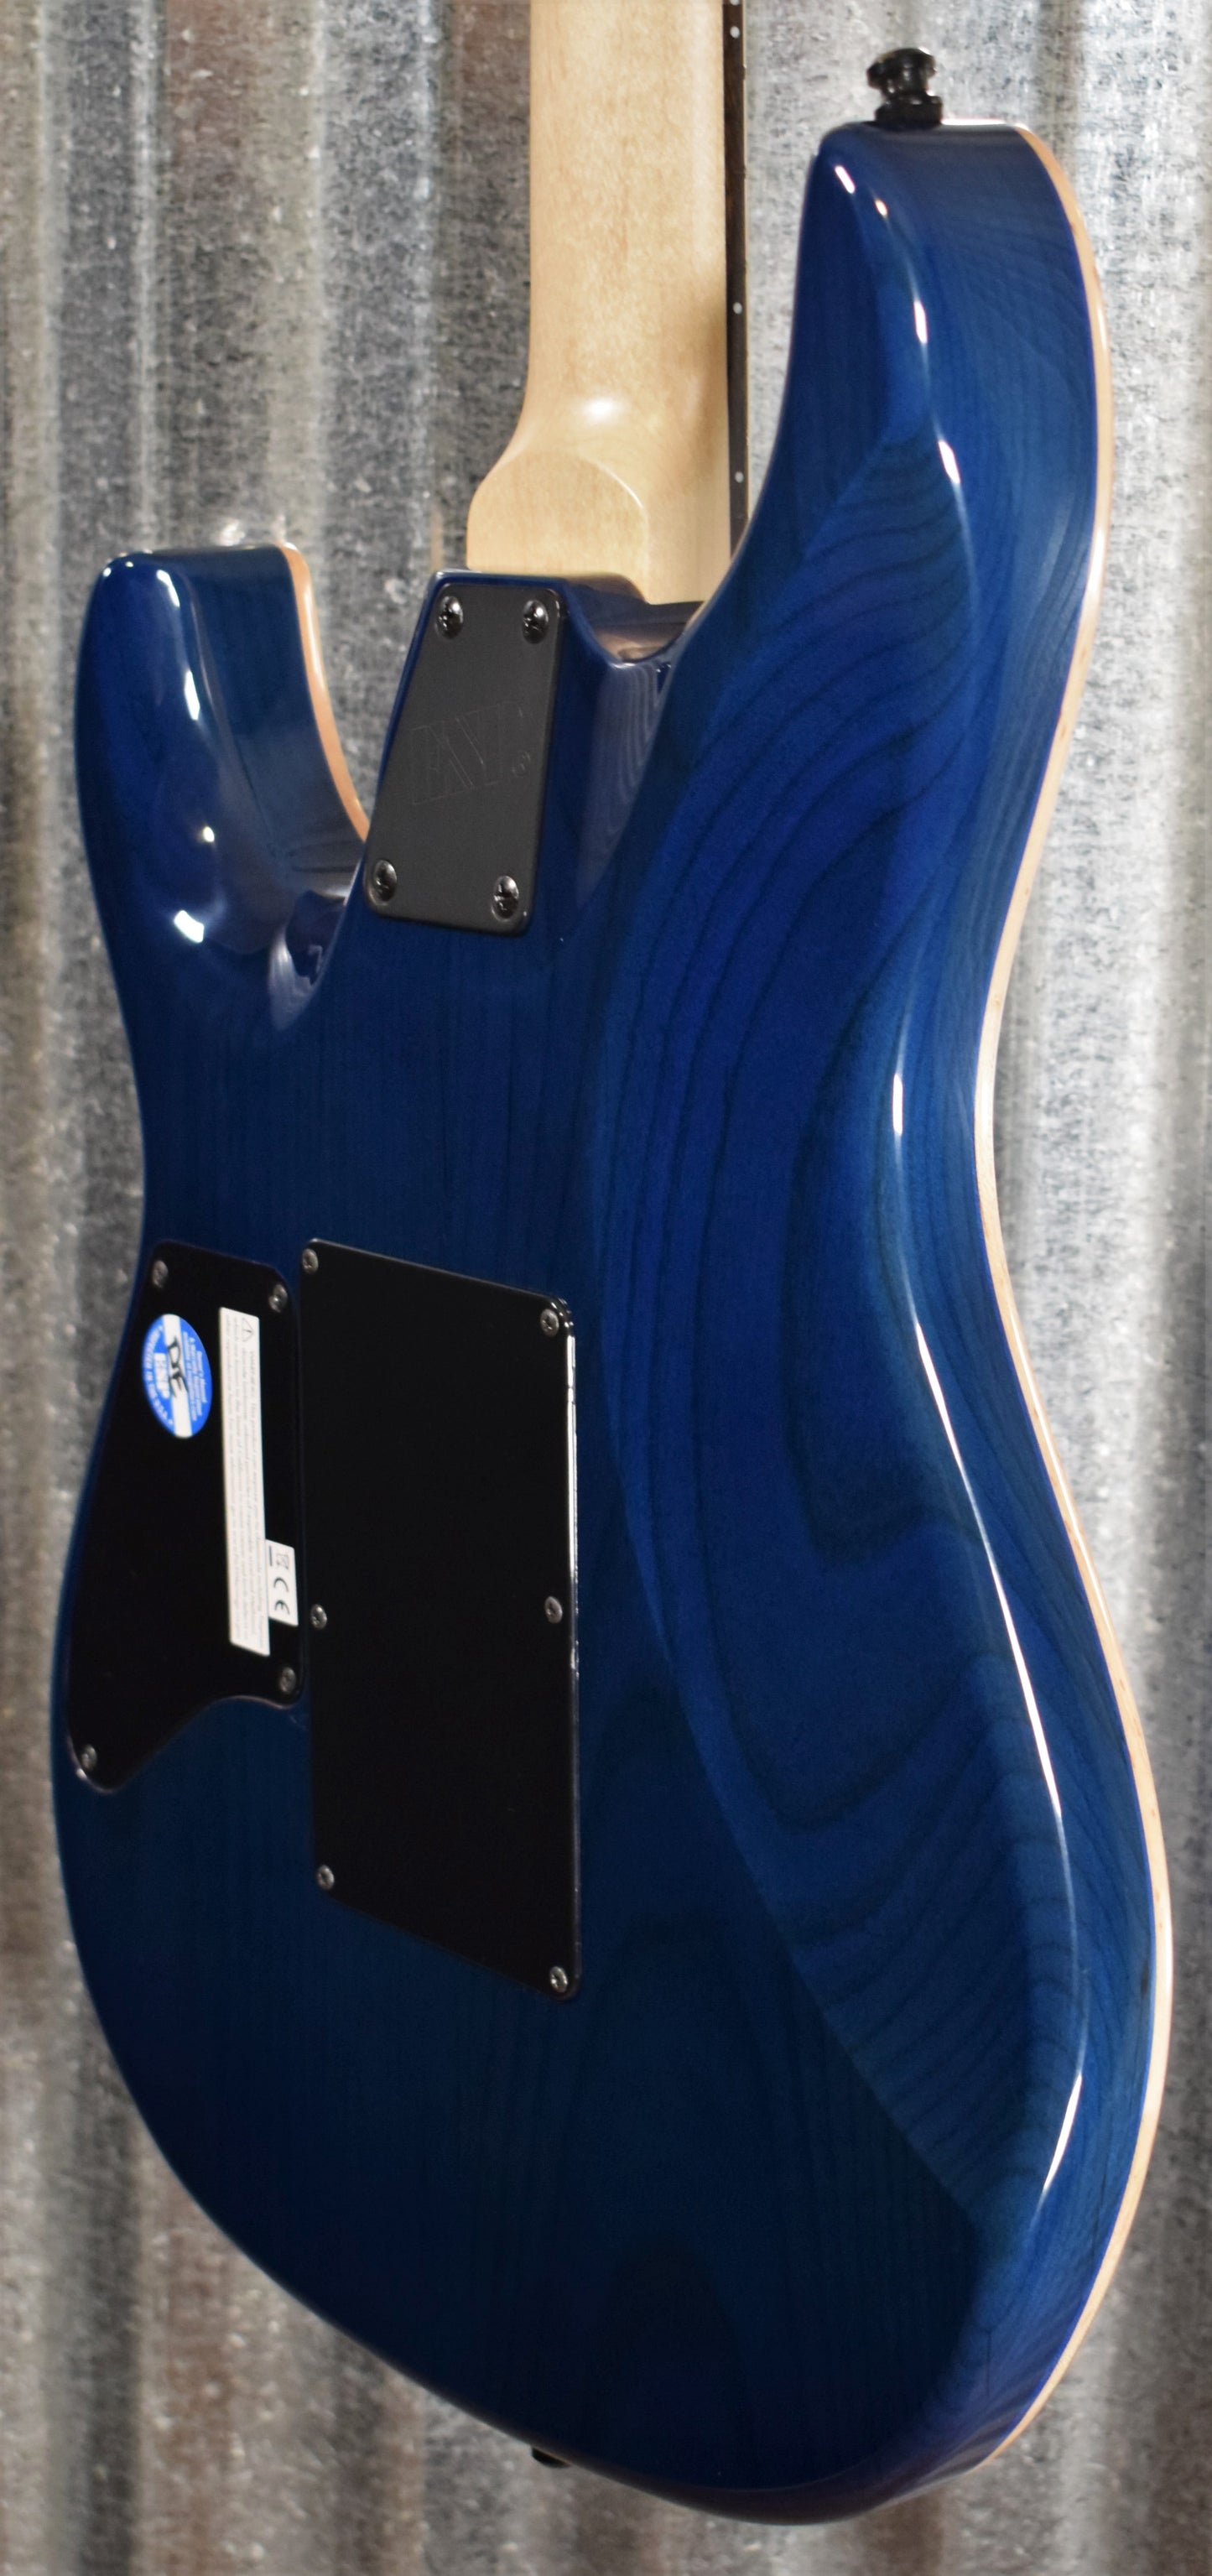 ESP E-II SN-2 Blue Natural Fade Bare Knuckle Guitar & Case EIISN2BMBLUNFD #1193